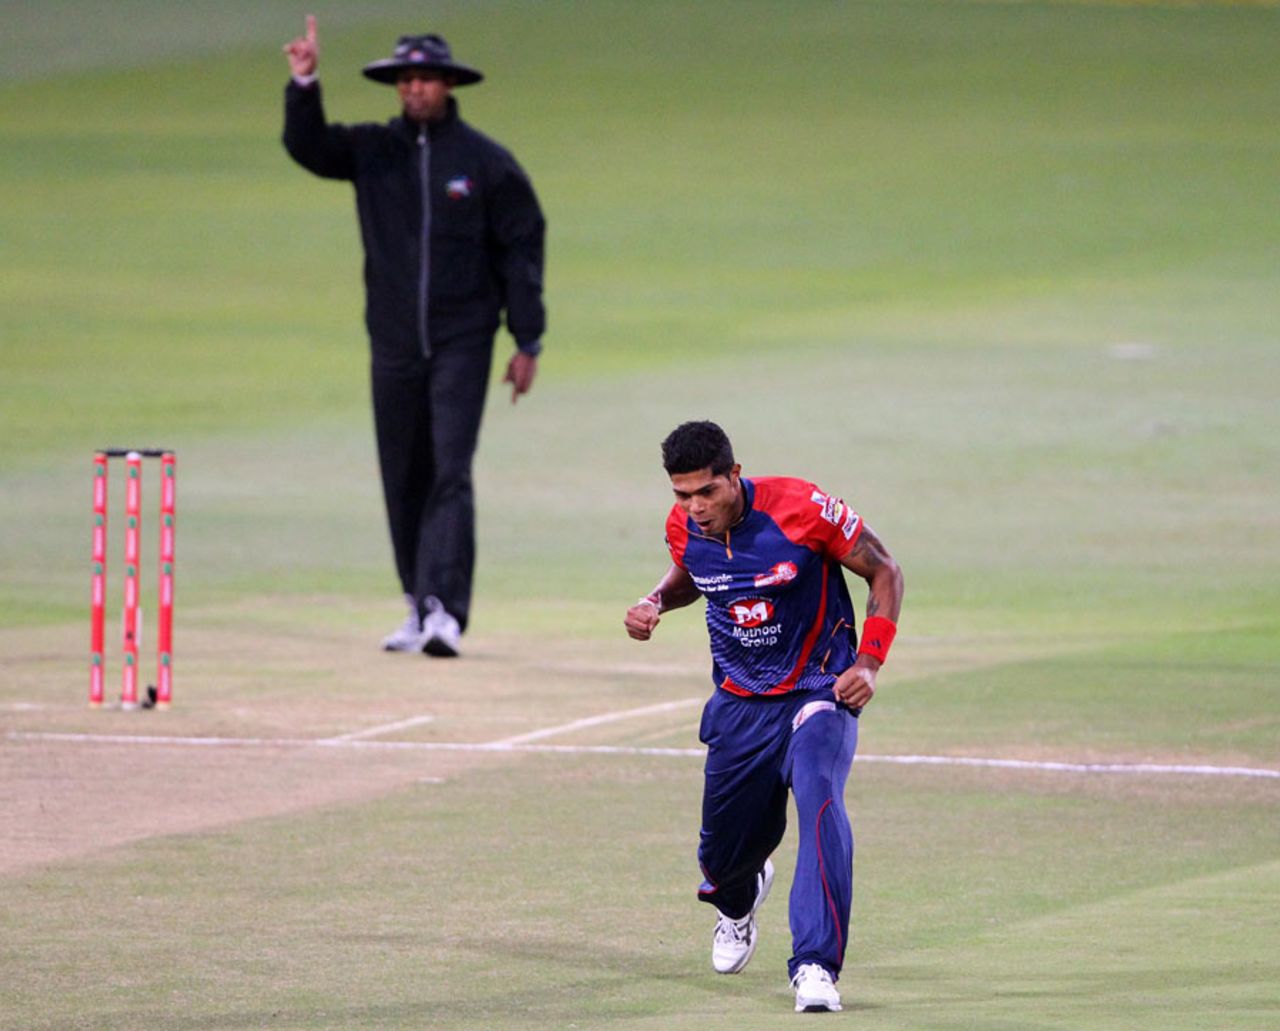 Umesh Yadav celebrates a wicket, Delhi Daredevils v Lions, 1st semi-final, Champions League T20, Durban, October 25, 2012